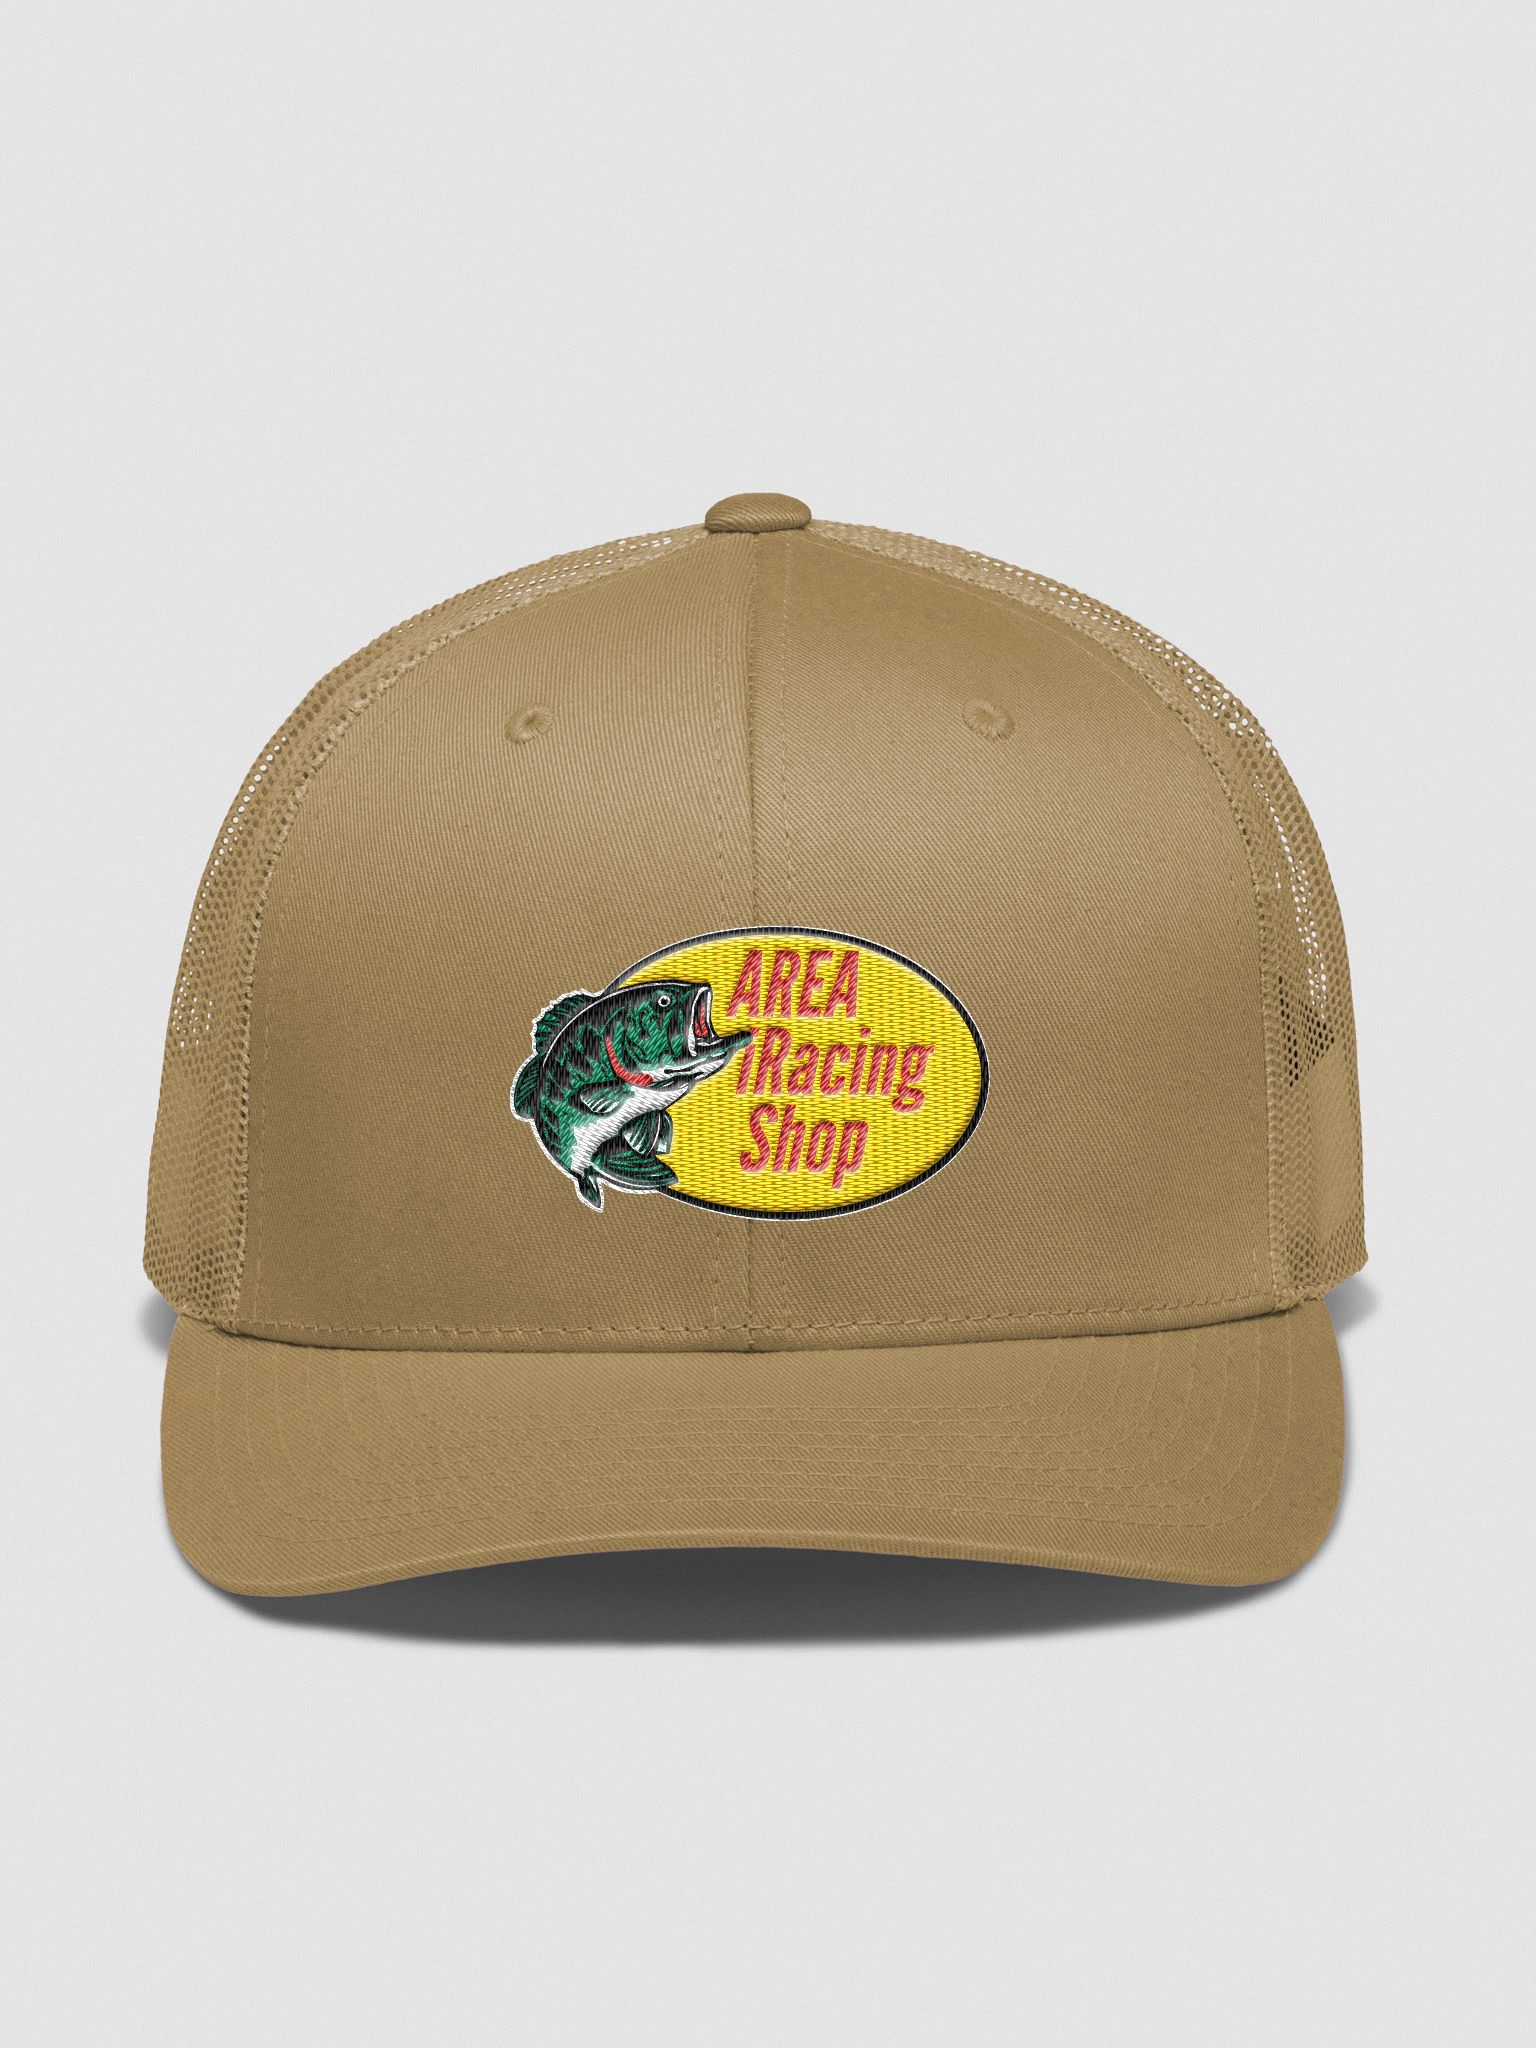 Area Iracing Shop Bass Hat